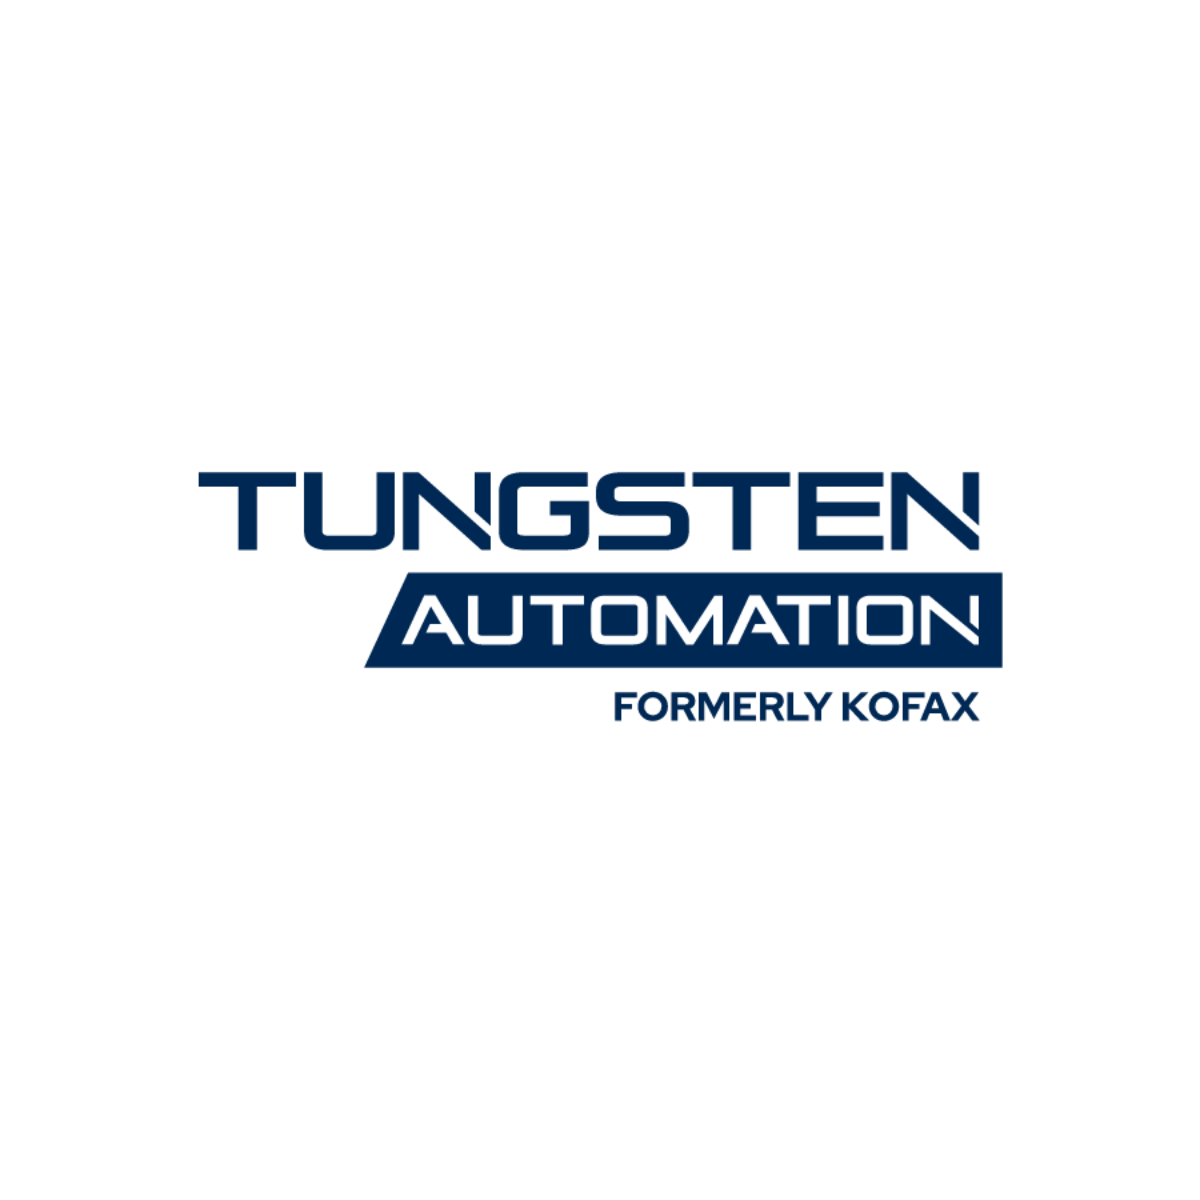 Tungsten Automation formerly Kofax